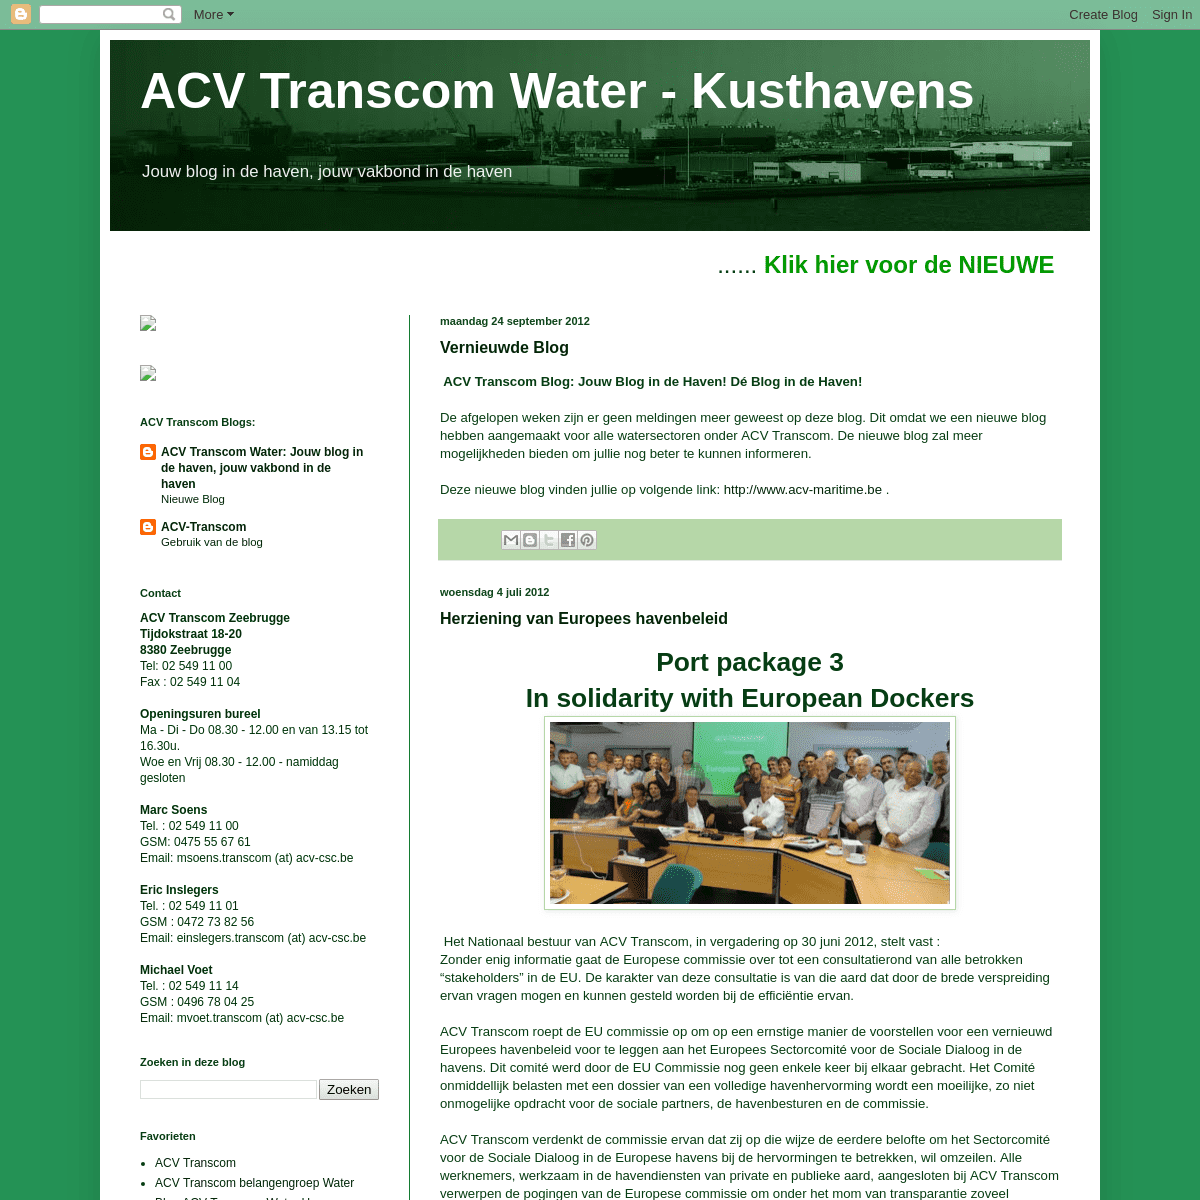 A complete backup of acvtranscomkusthavens.blogspot.com